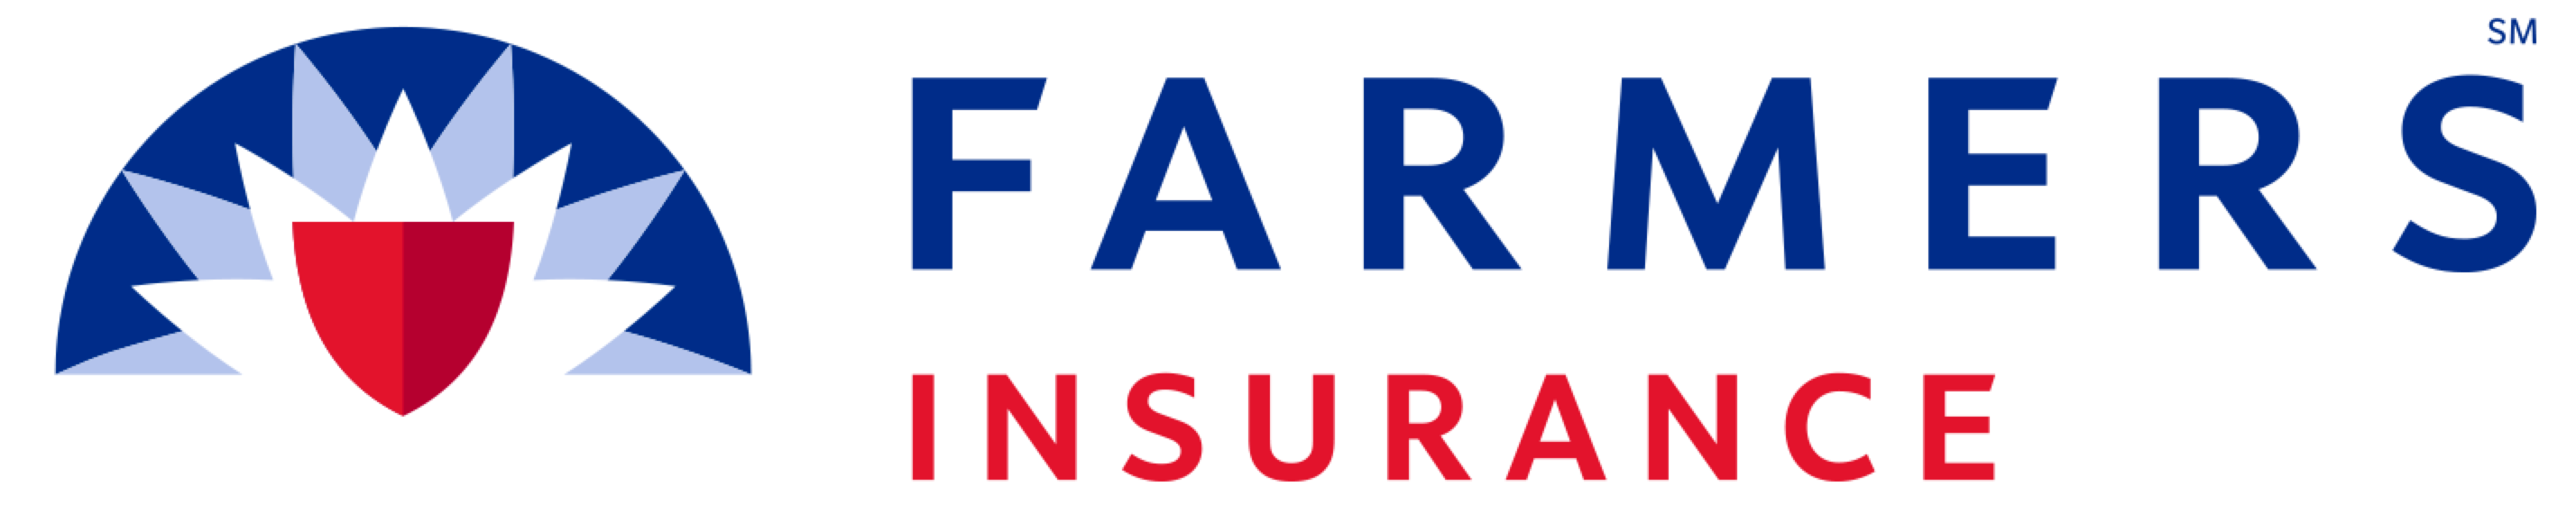 Rider Insurance Agency LLC/FARMERS INSURANCE Organization 